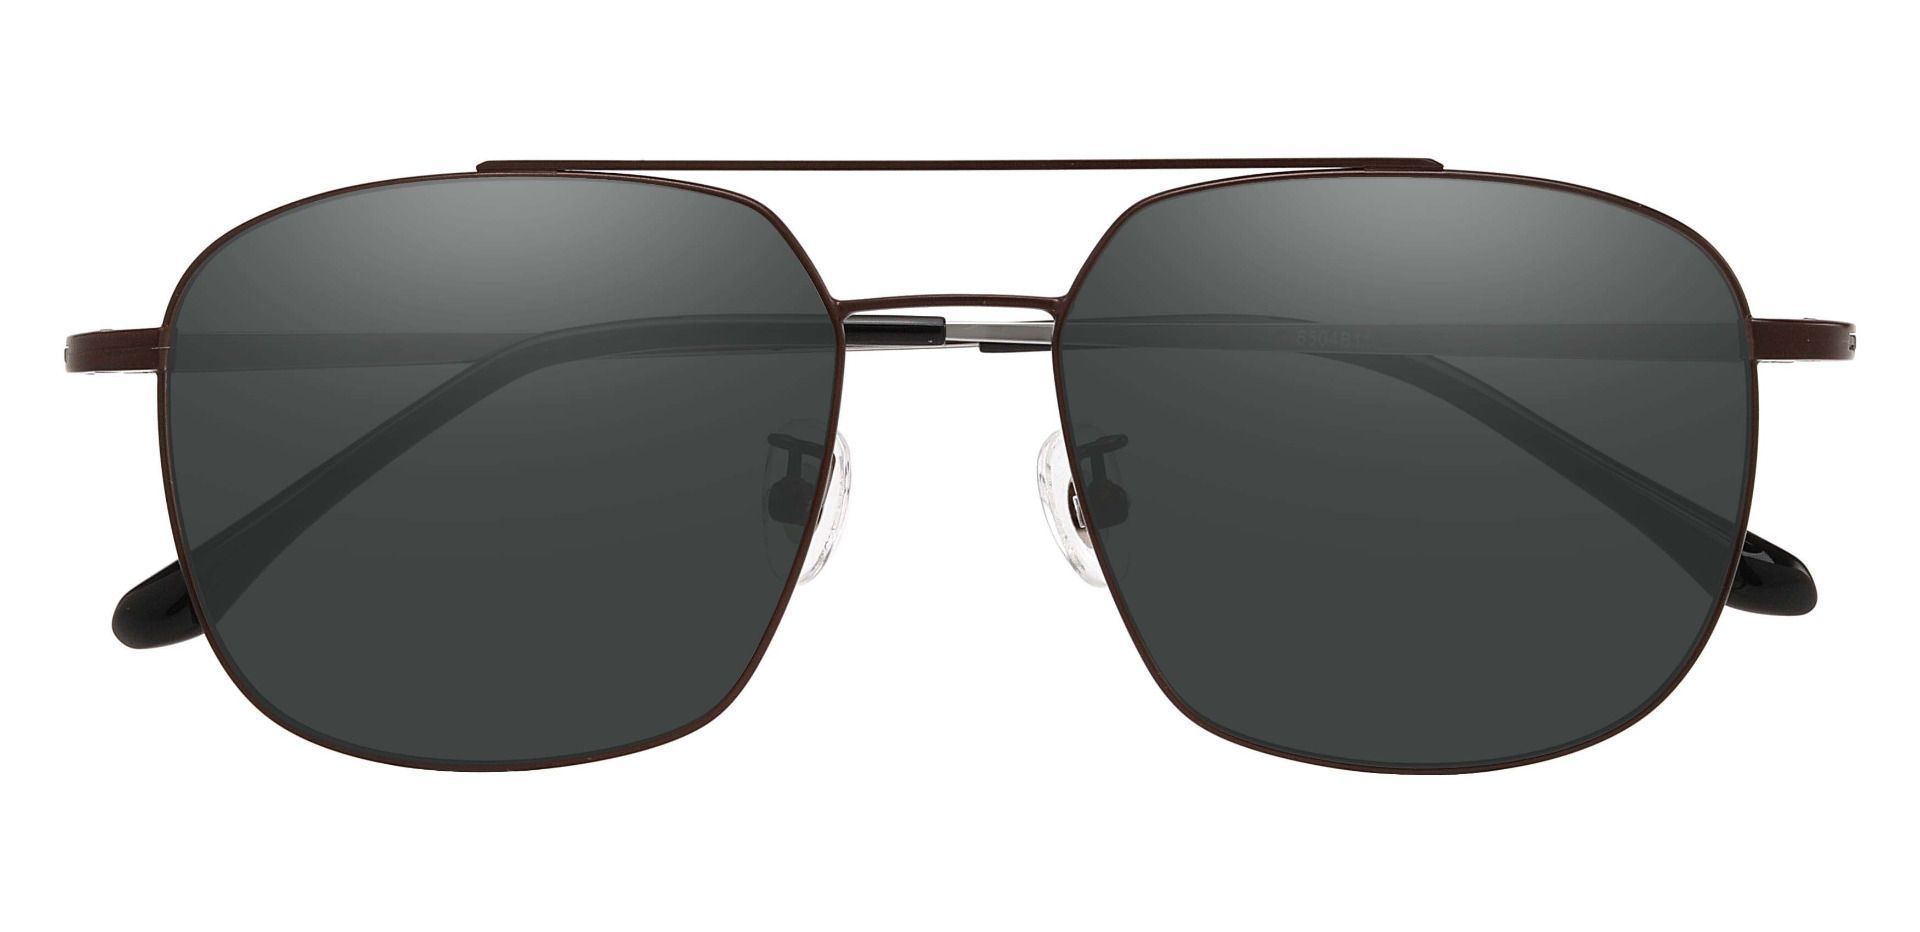 Trevor Aviator Prescription Sunglasses - Brown Frame With Gray Lenses